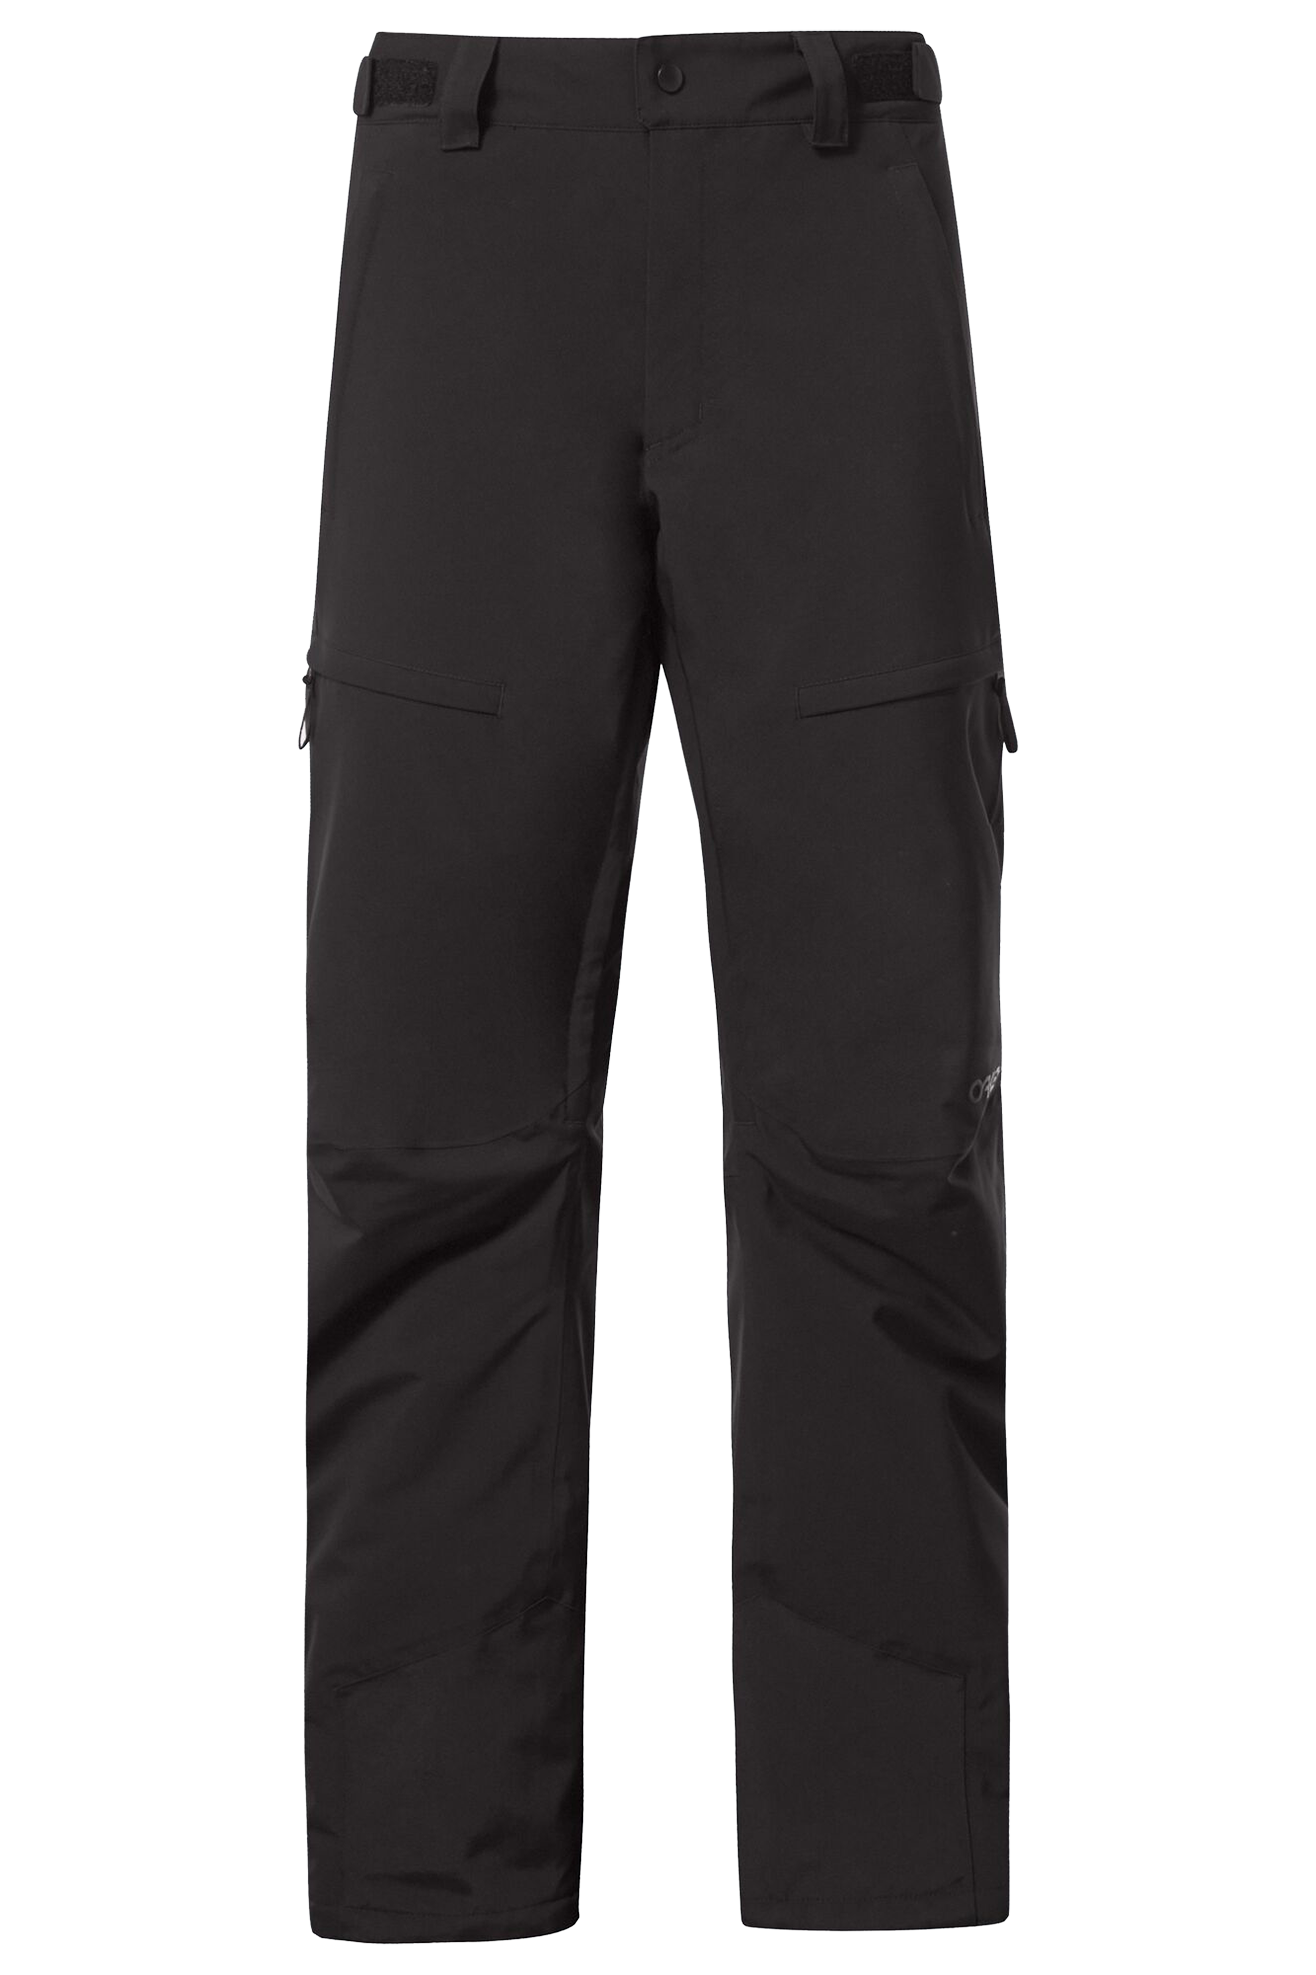 Pantalones Oakley Axis Insulated Negro Apagado - Ahora con un 33% de  descuento